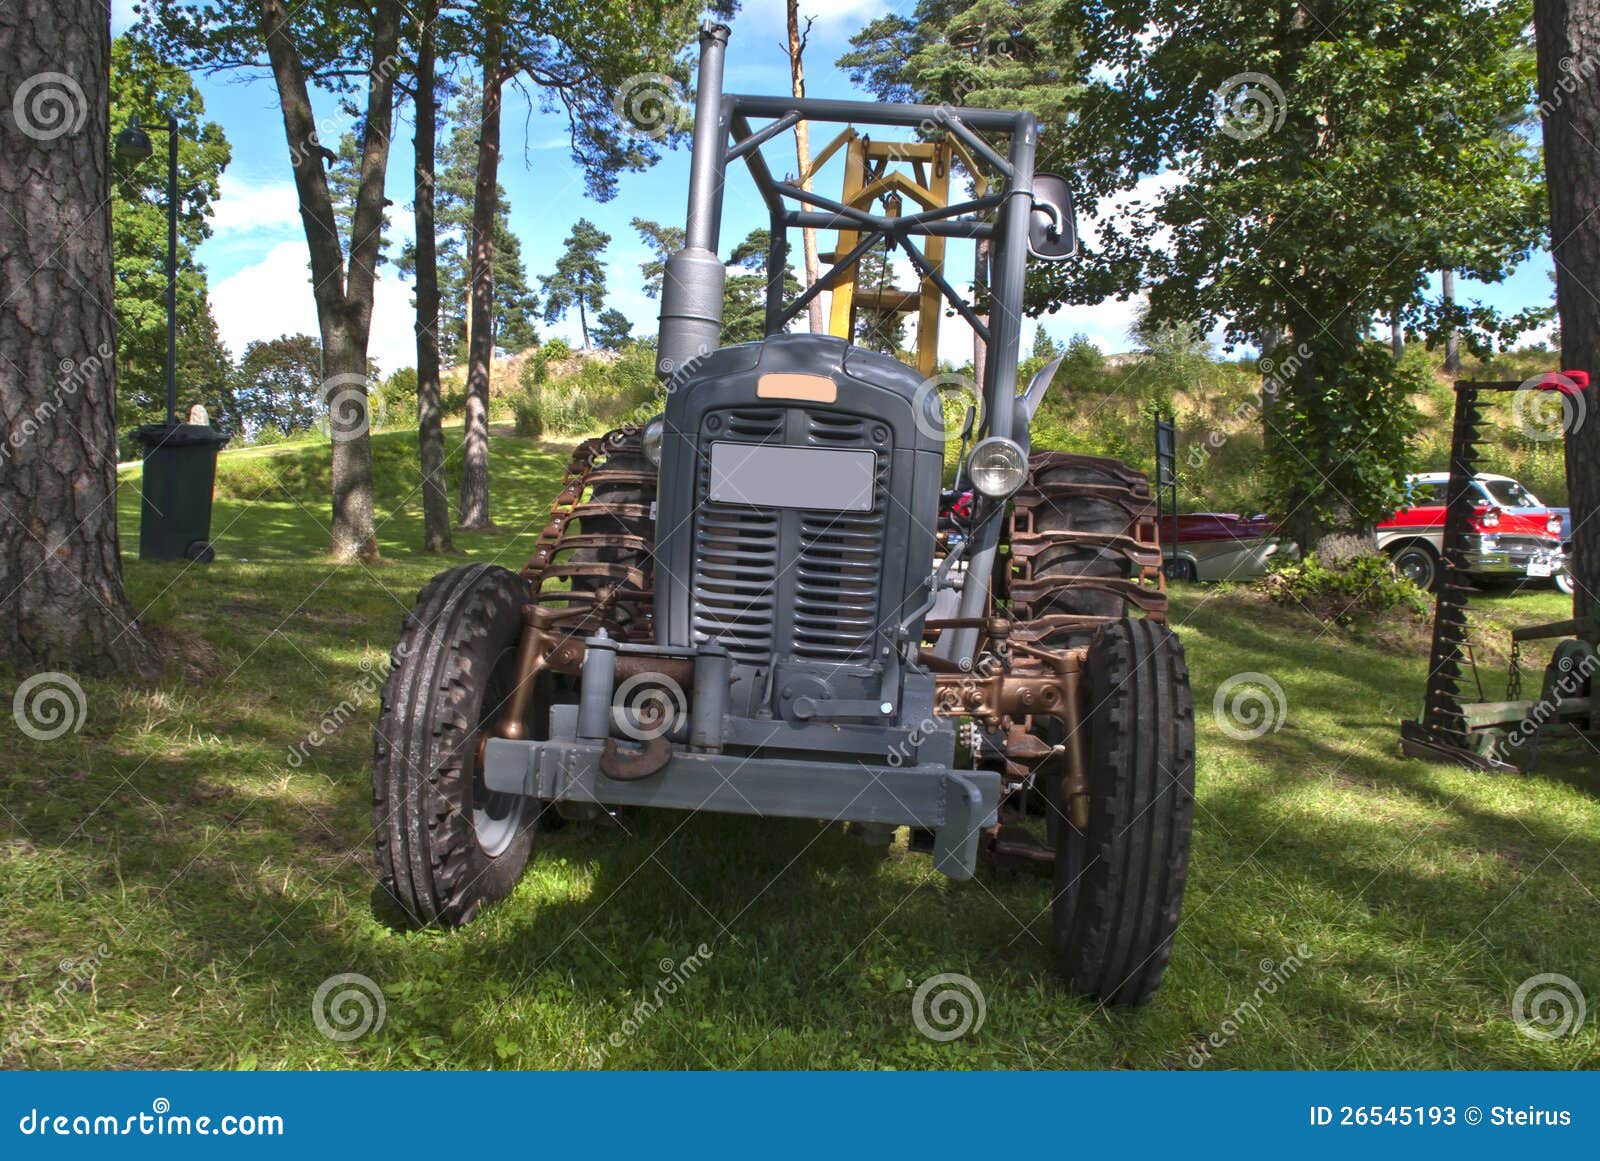 old tractor (ferguson)